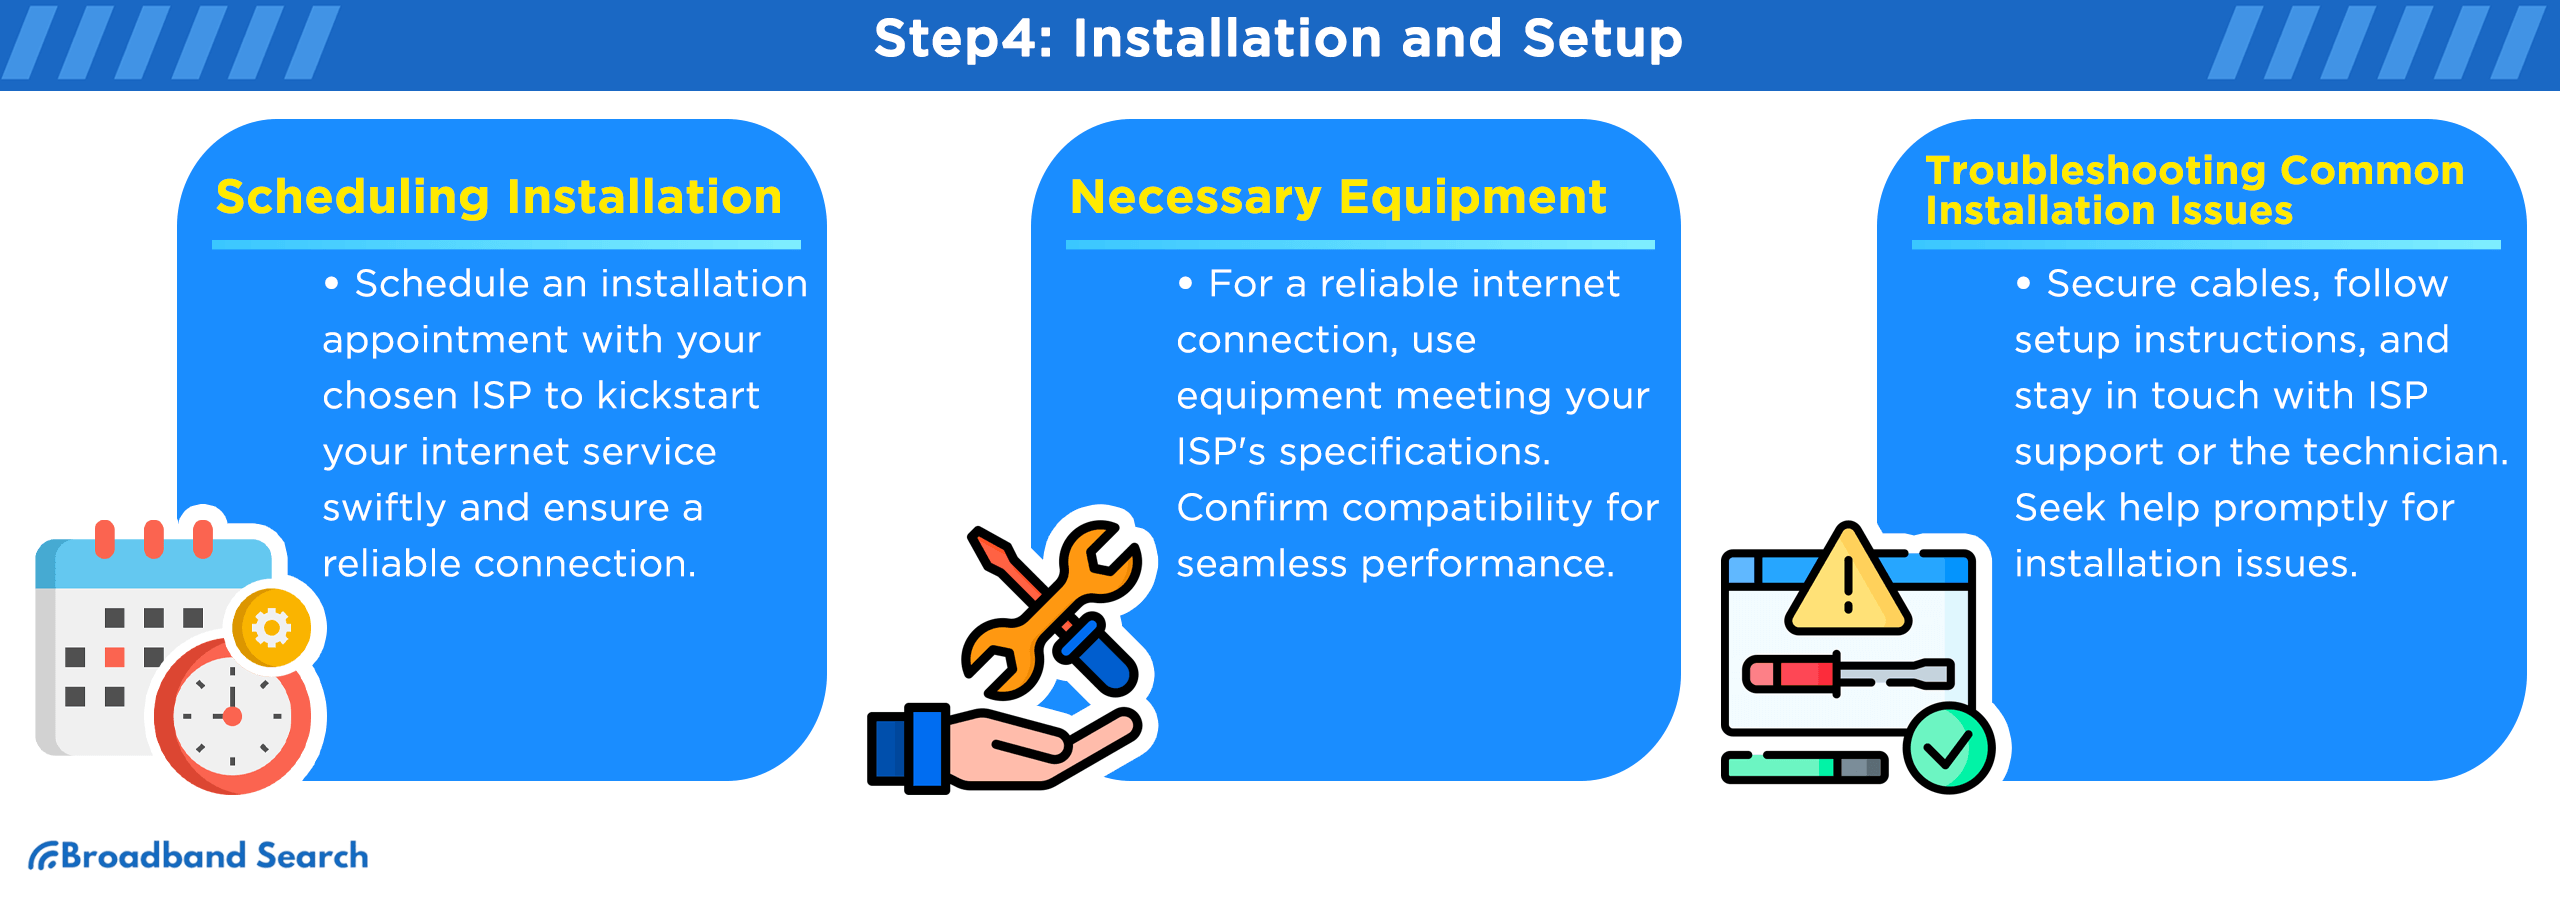 Three tips on installation and setup of broadband internet